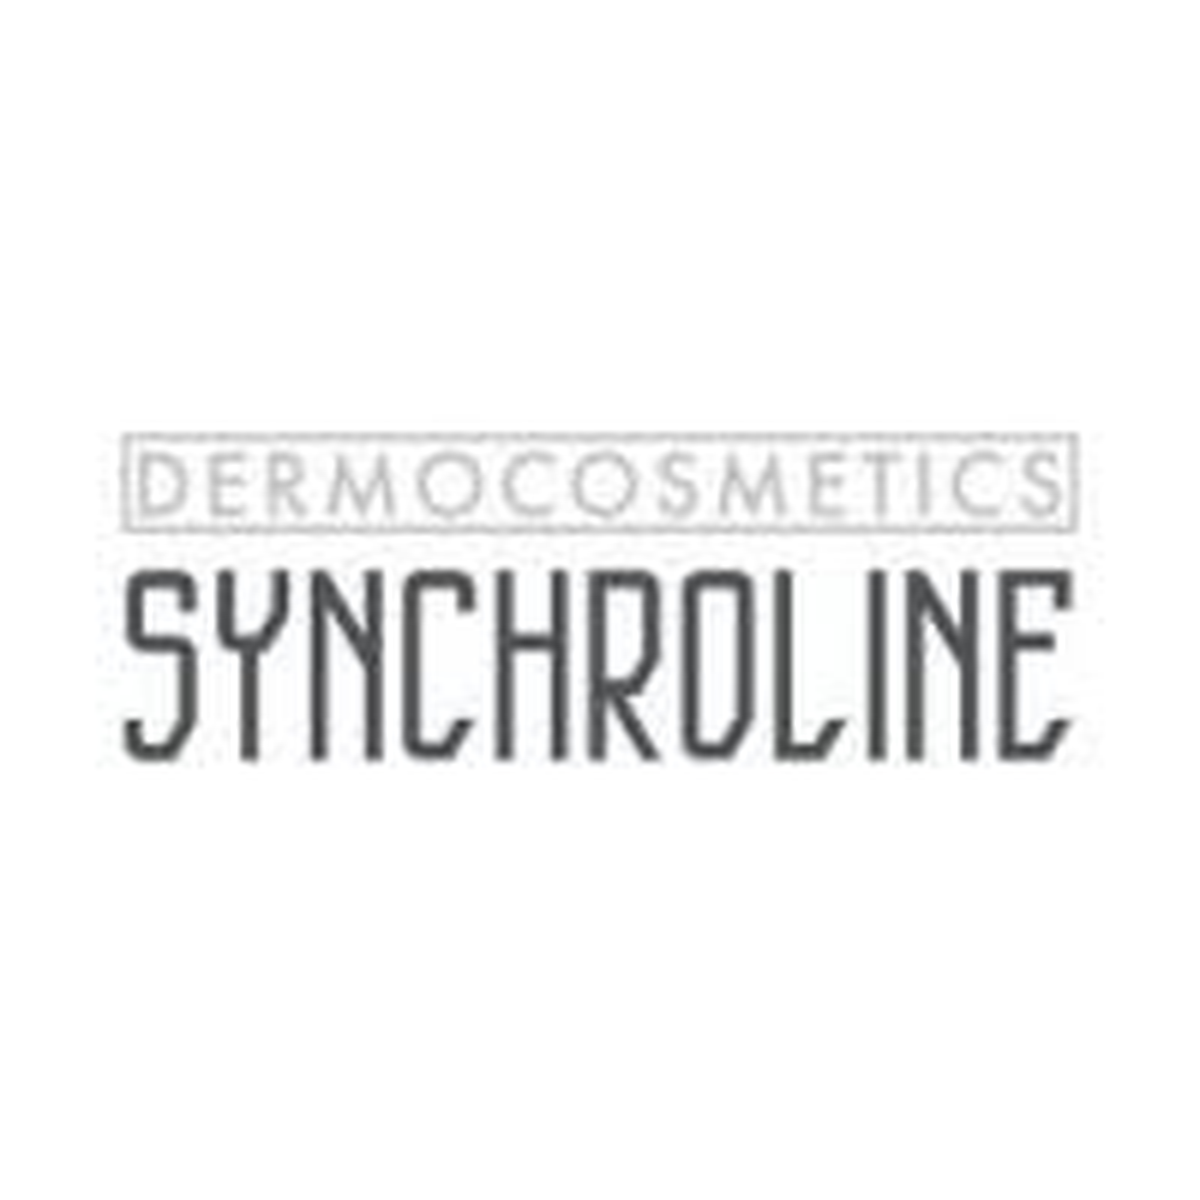 Synchroline